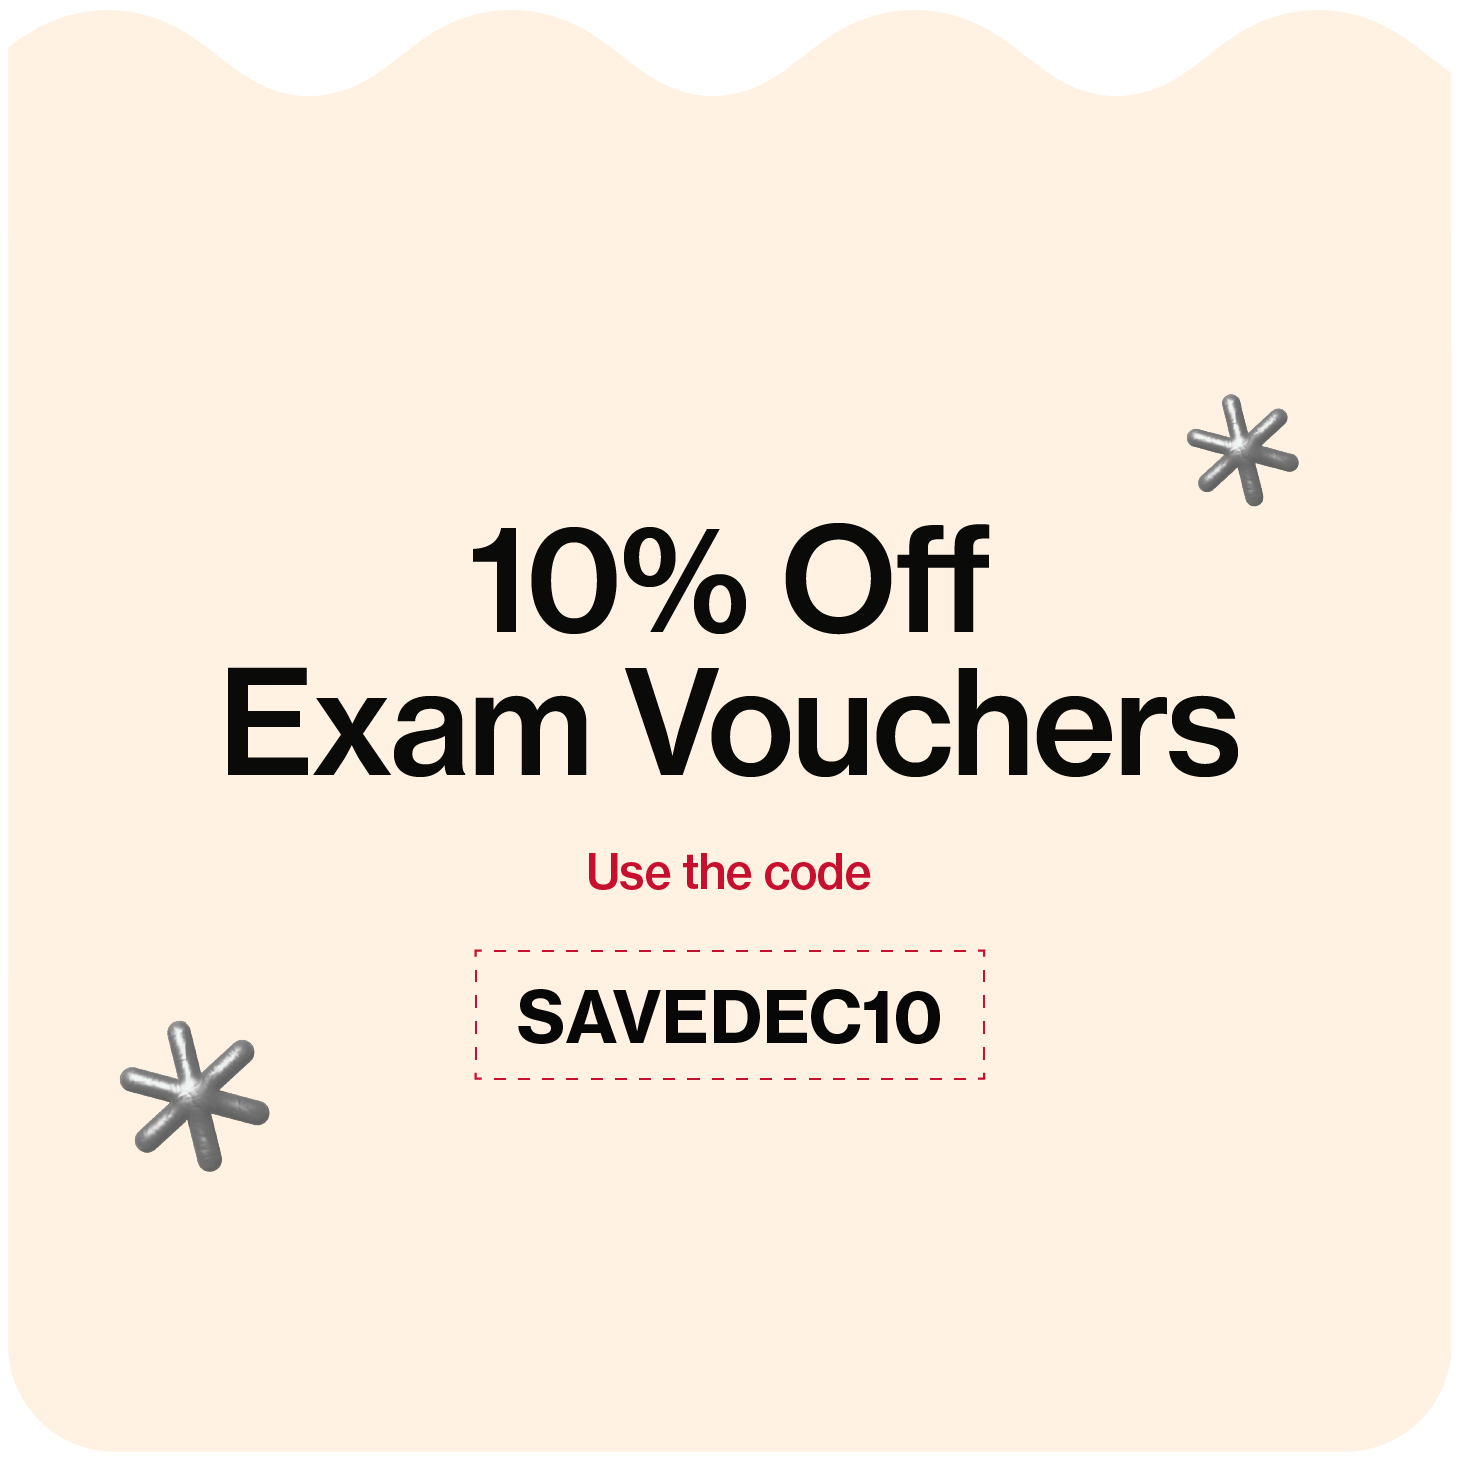 10% Off Exam Vouchers Use the code: SAVEDEC10